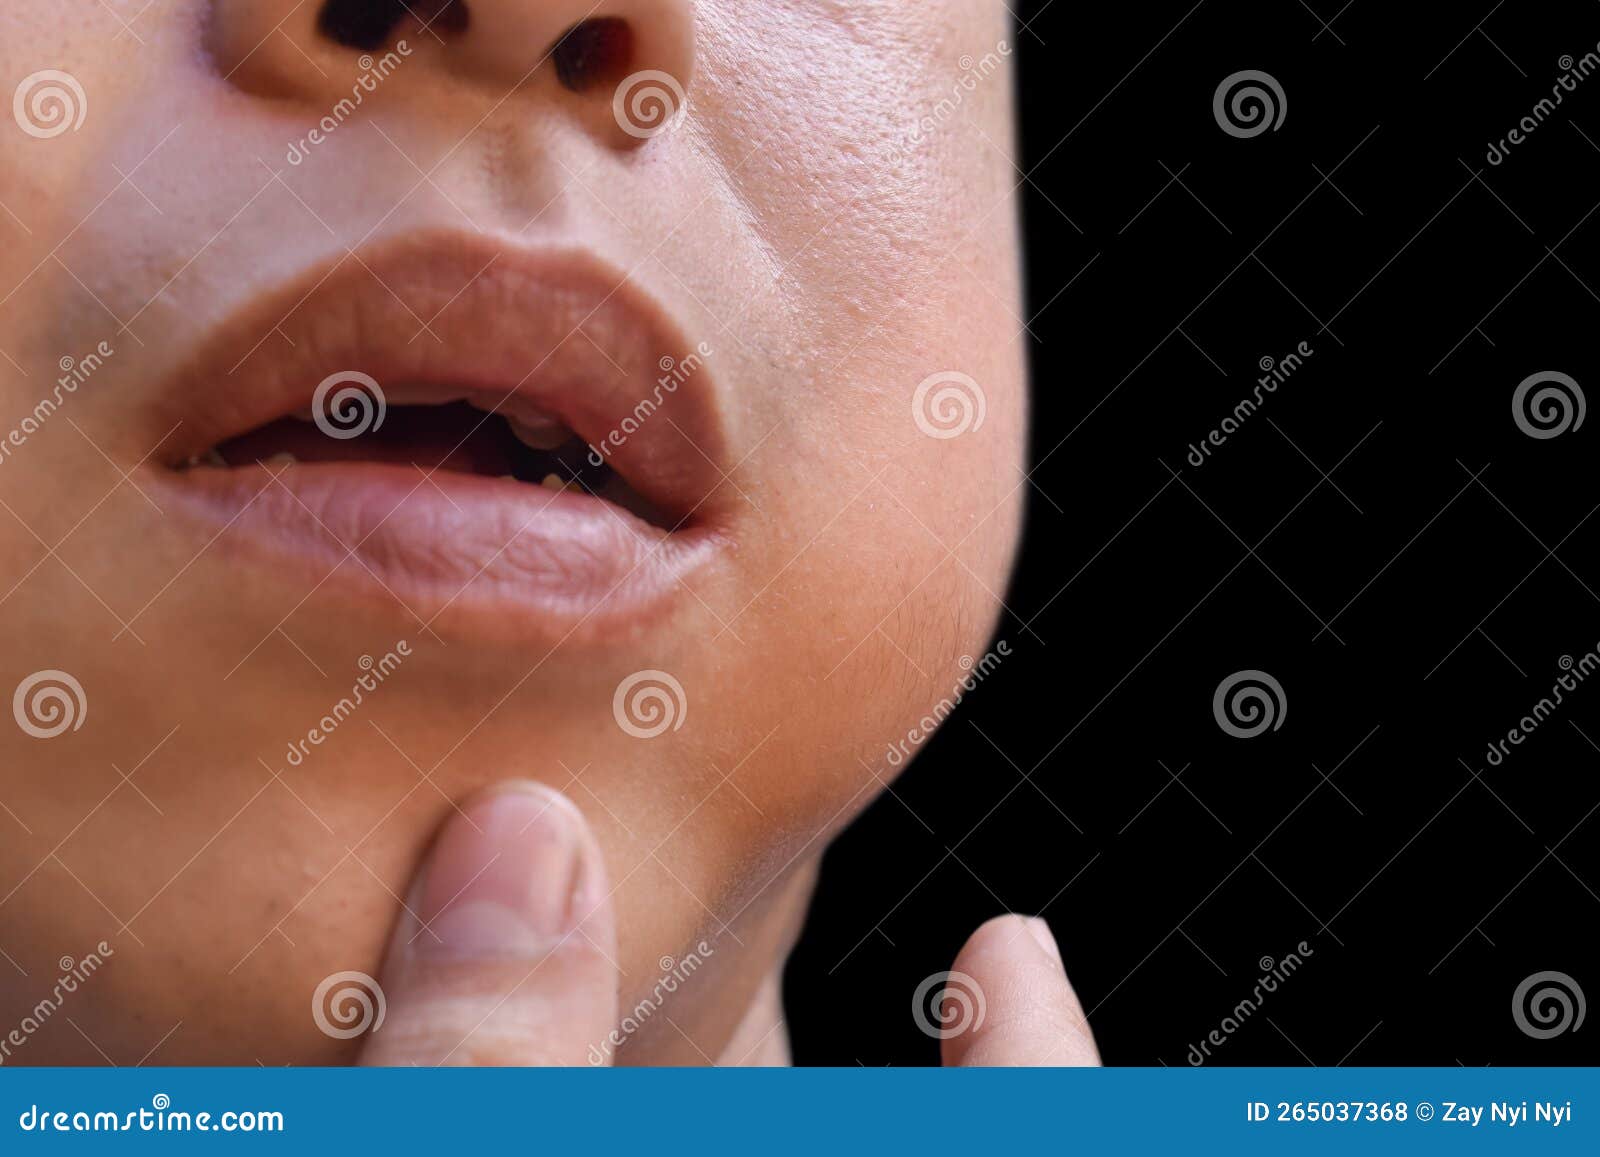 swelling at the cheek of asian man. inflammation of parotid gland called parotitis. mumps